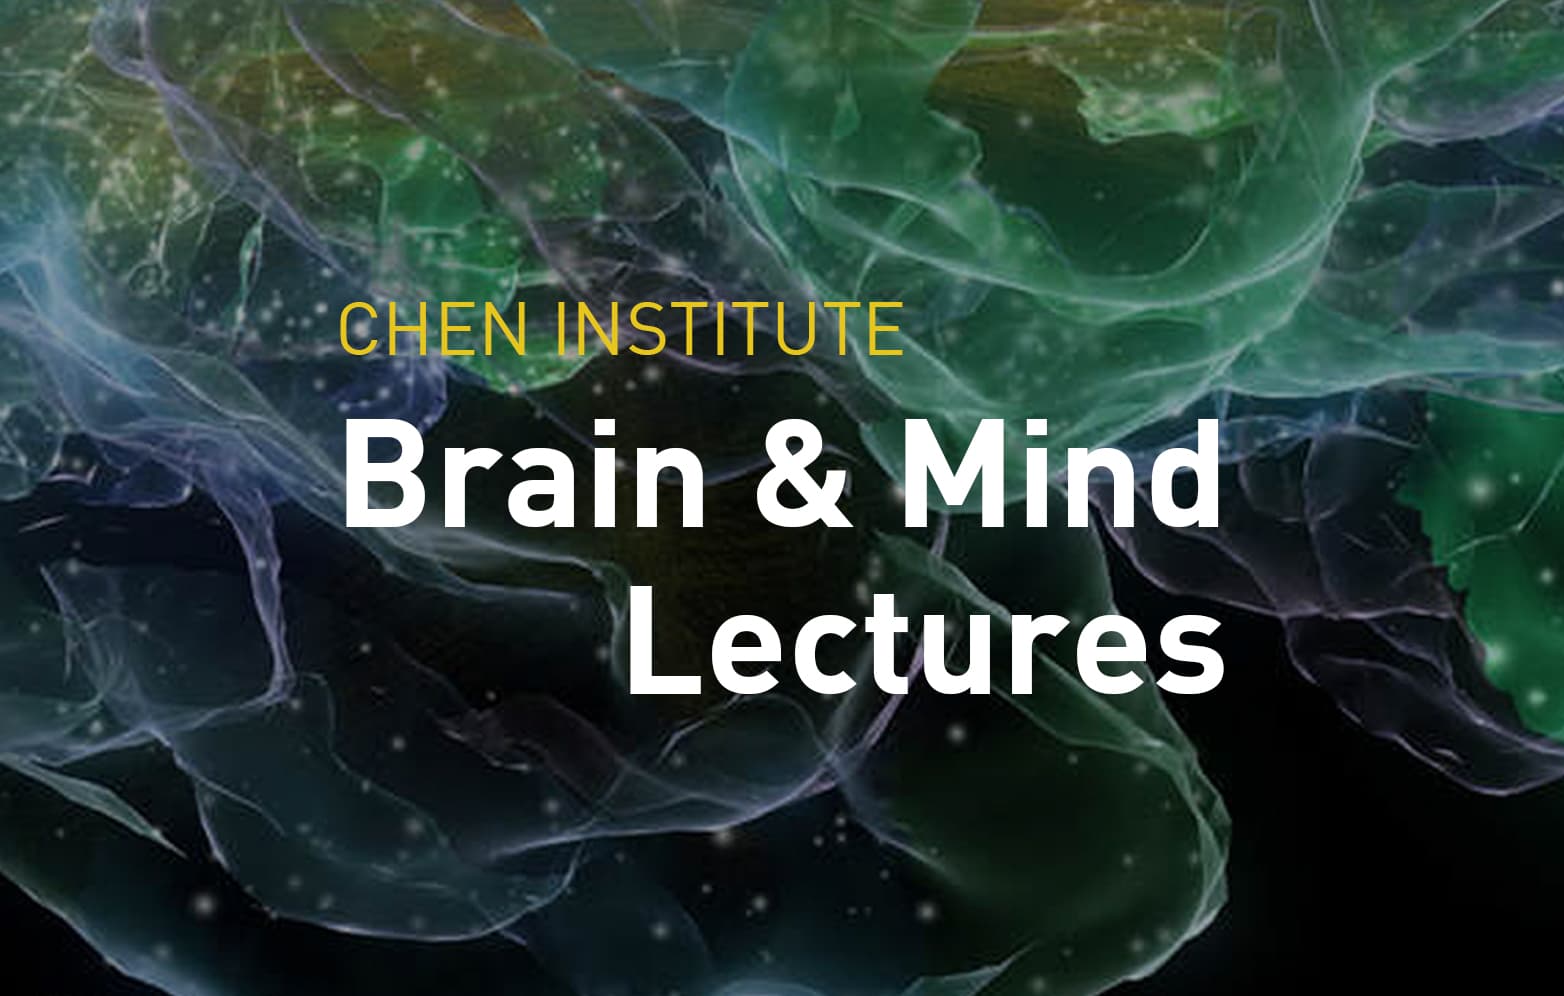 Chen Institute Brain & Mind Lectures series